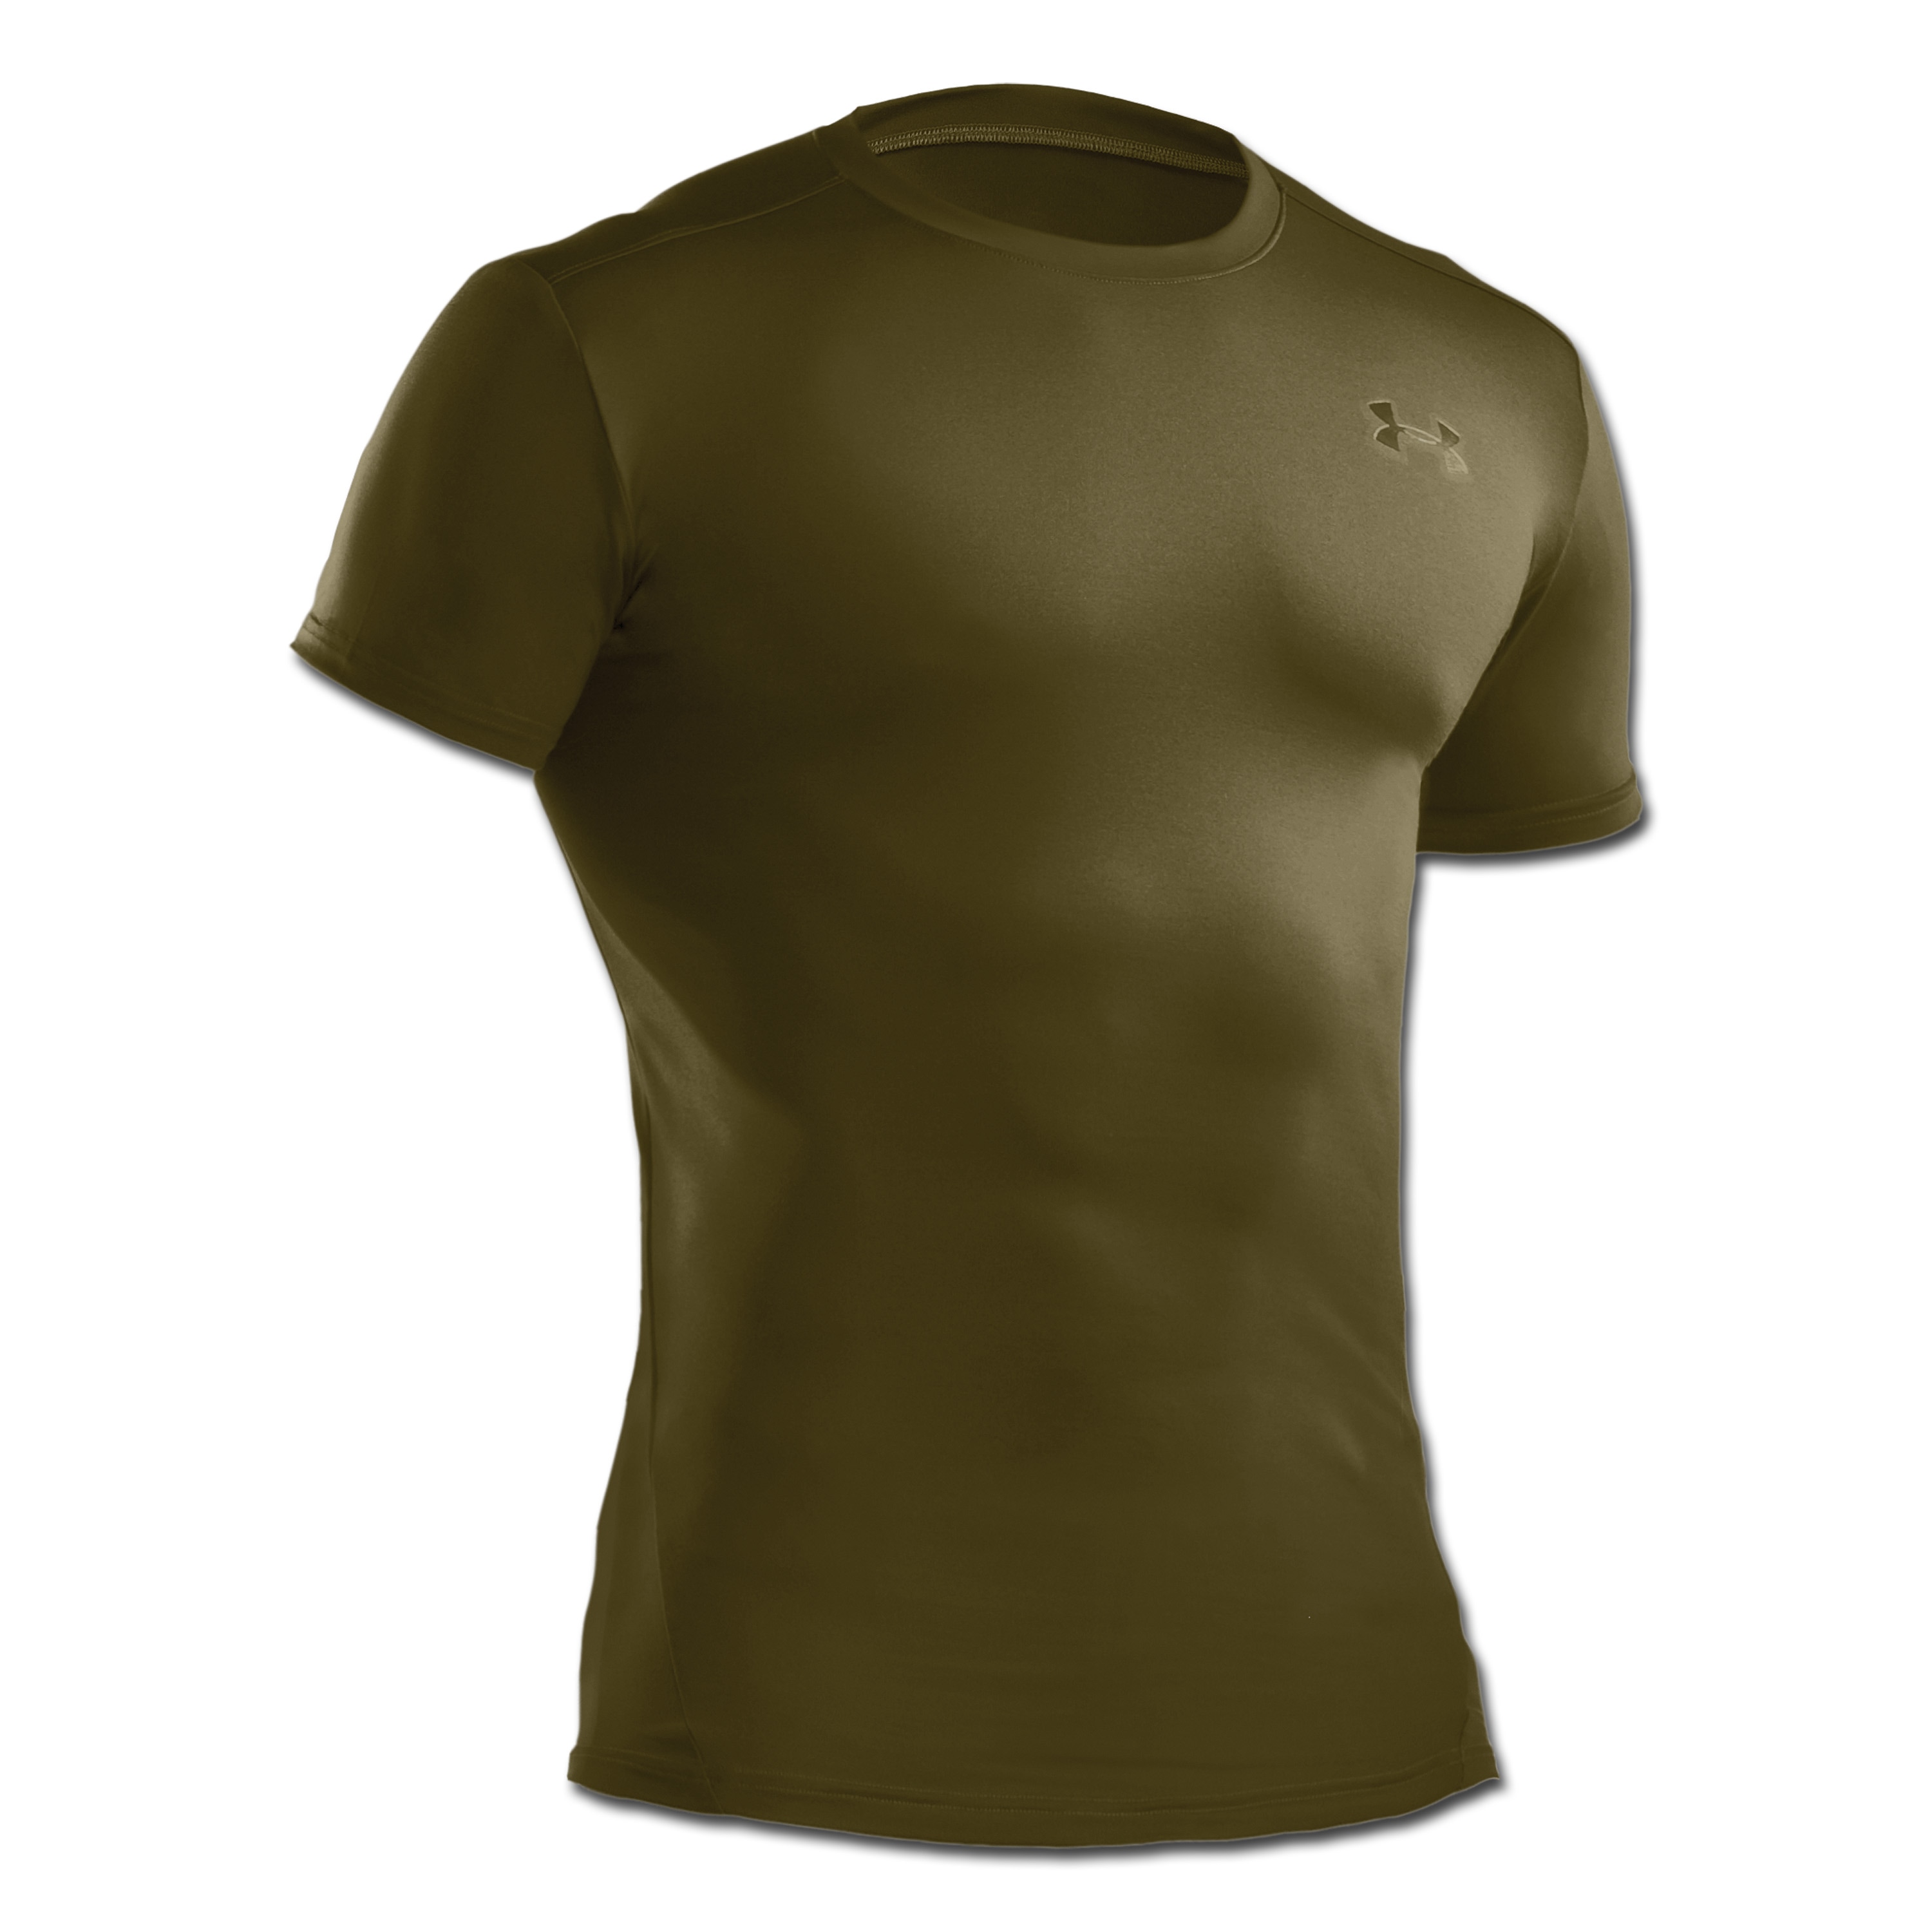 Under Armour Men's HeatGear Armour Comp SS Compression Forest Green T-Shirt